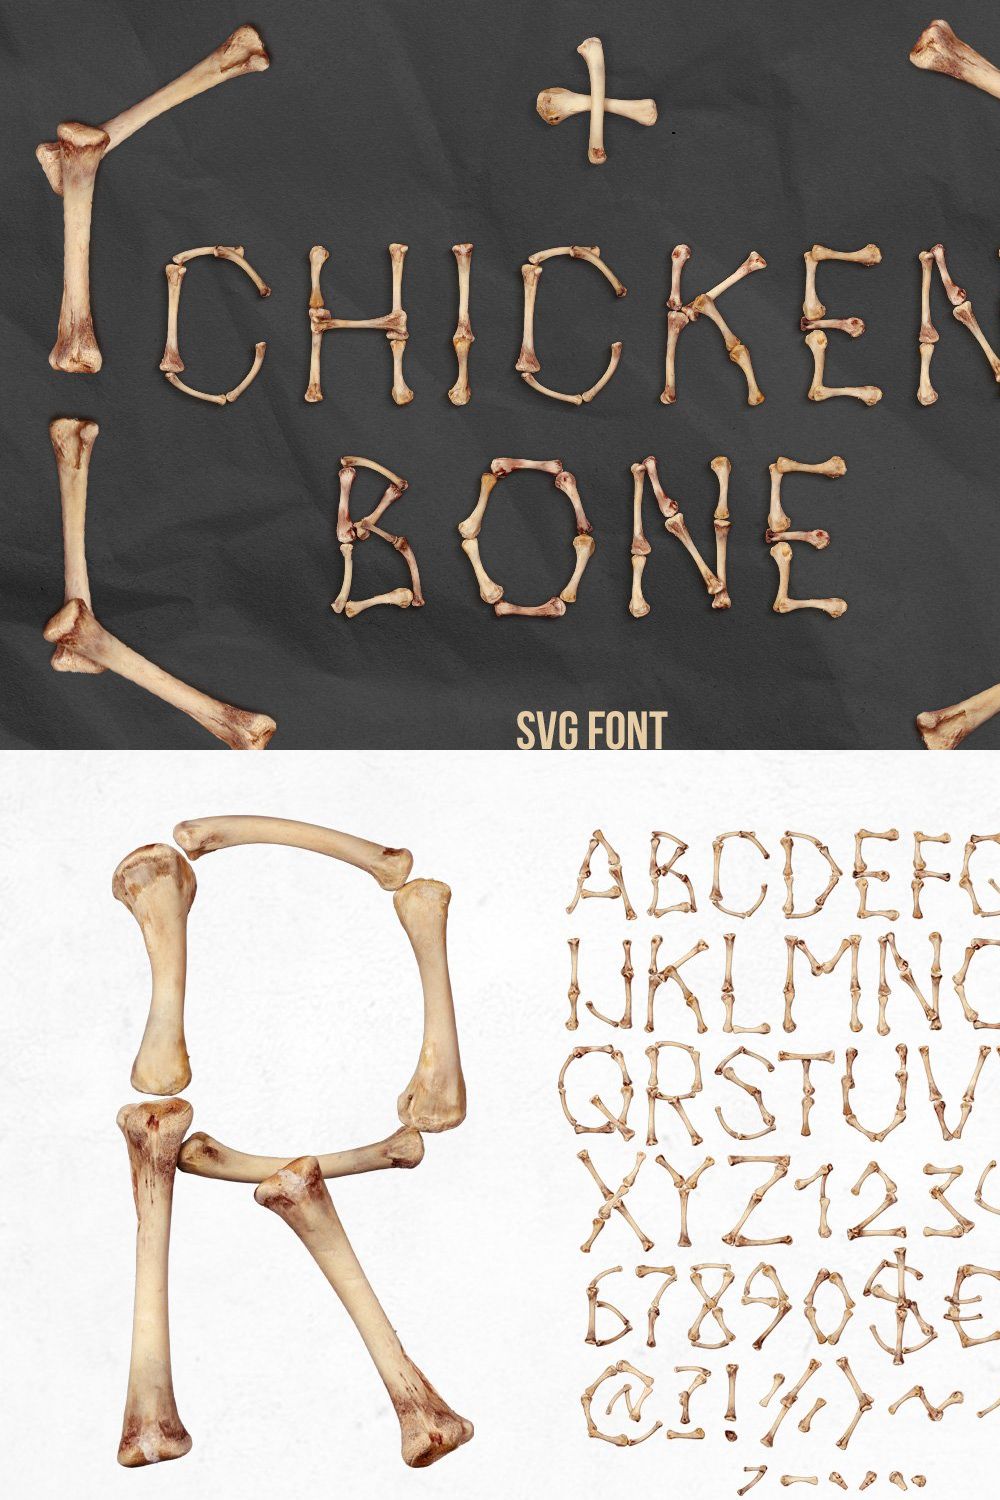 Chicken Bones Font pinterest preview image.